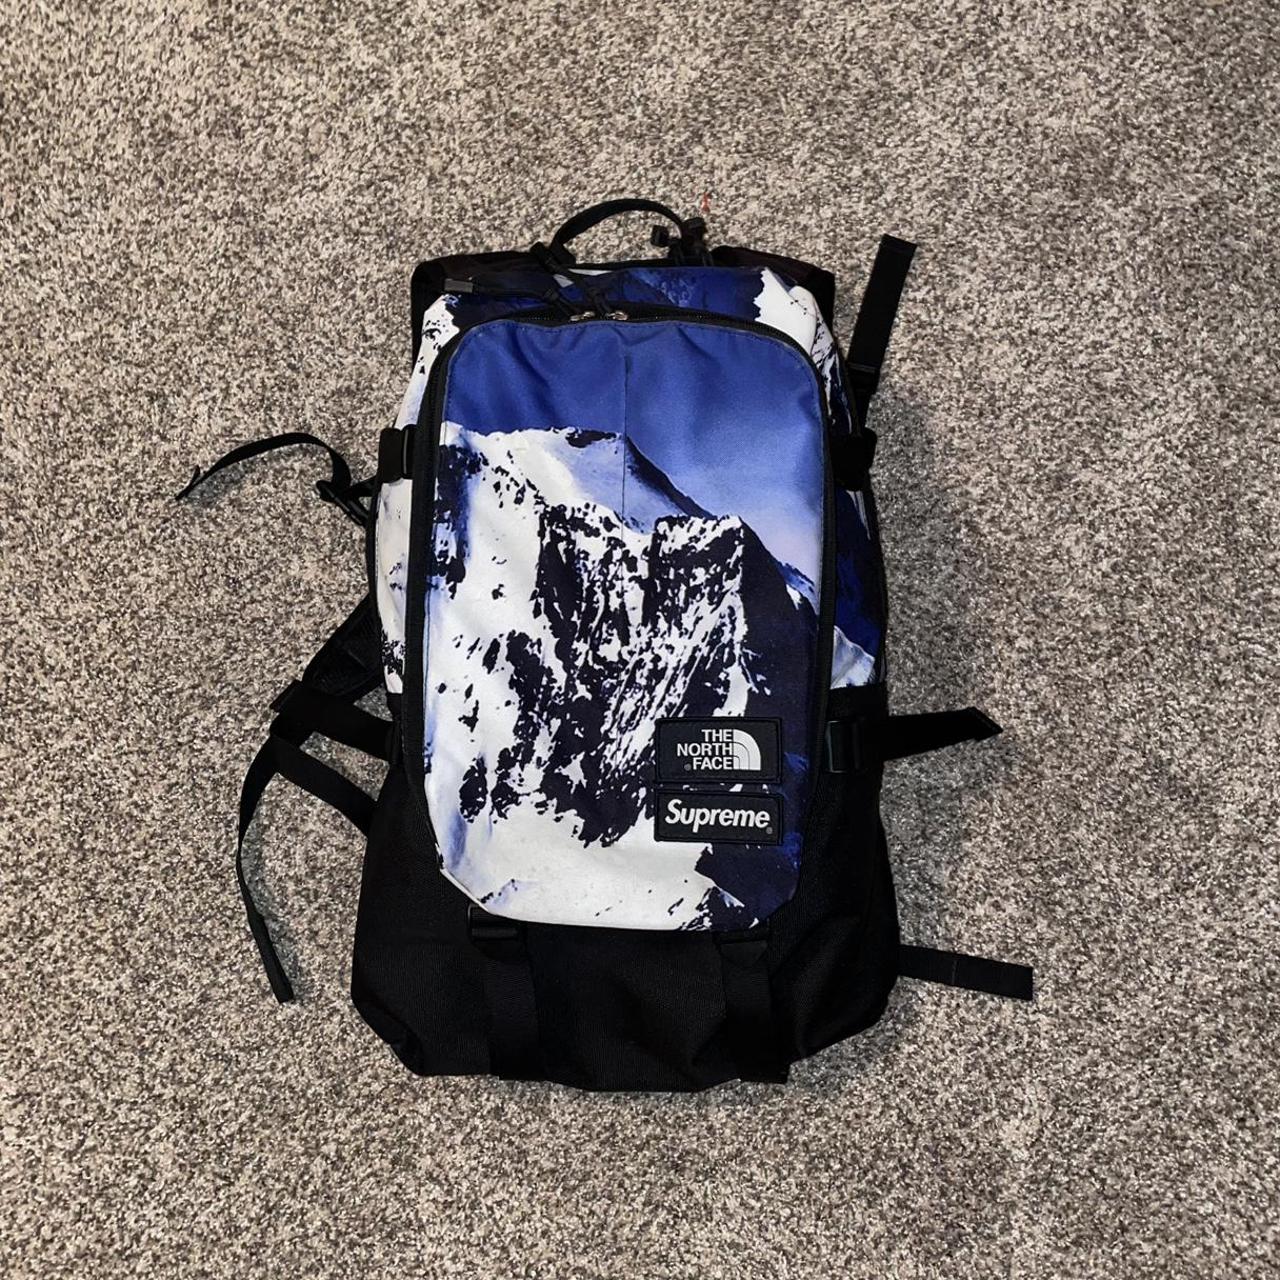 Vintage authentic supreme backpack purchased on - Depop